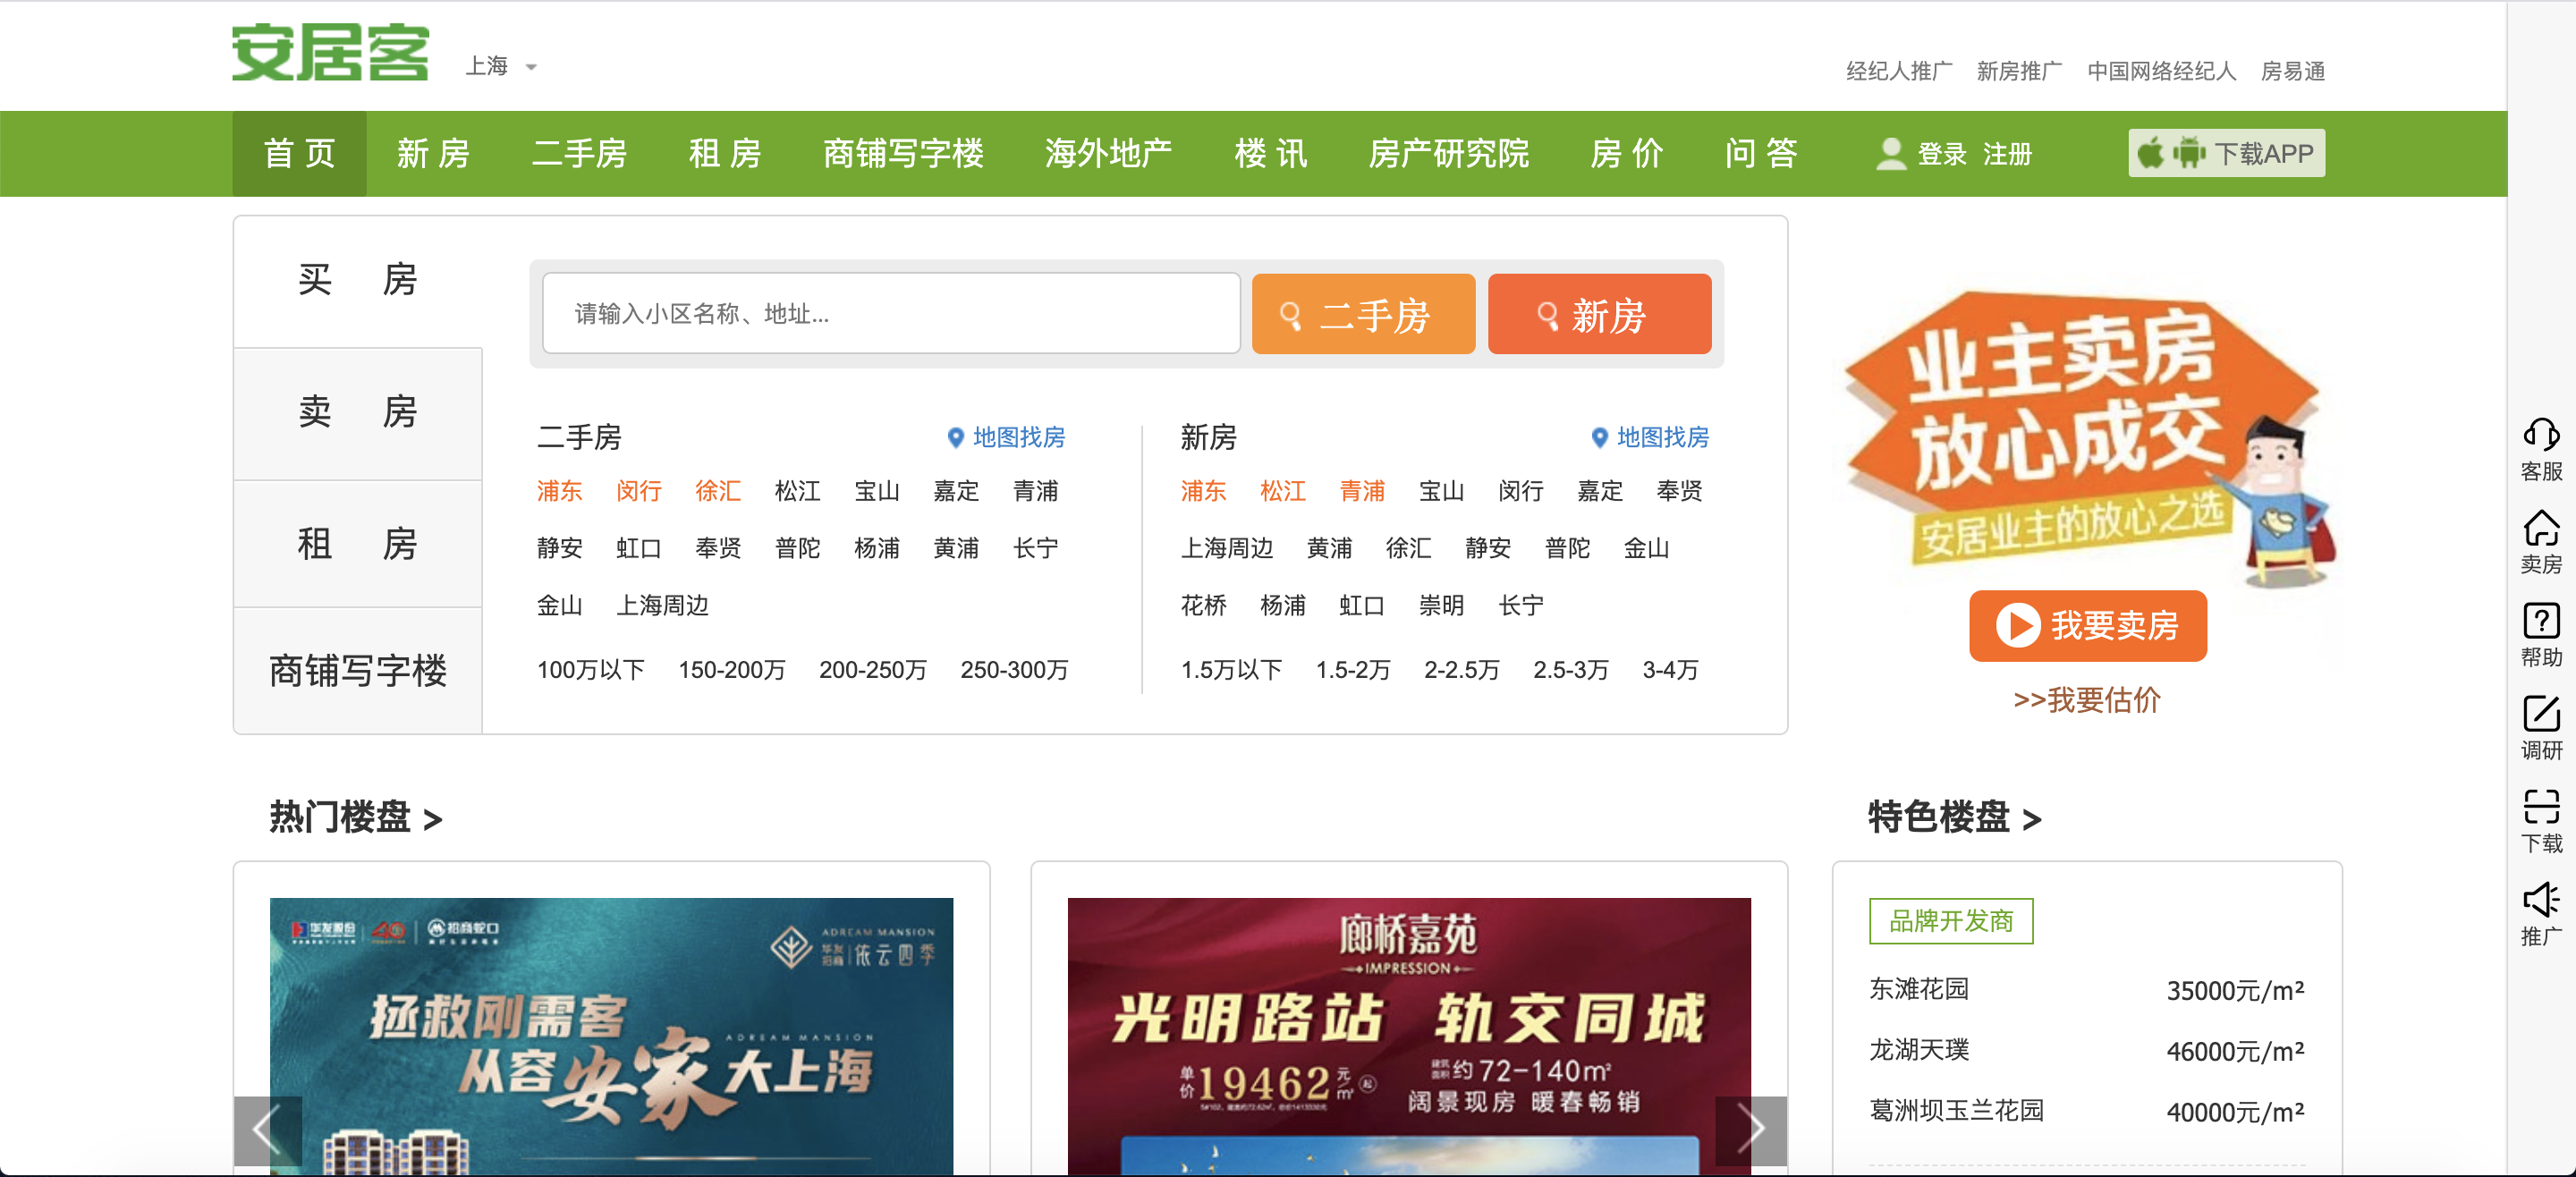 Anjuke.com Chinese real estate website